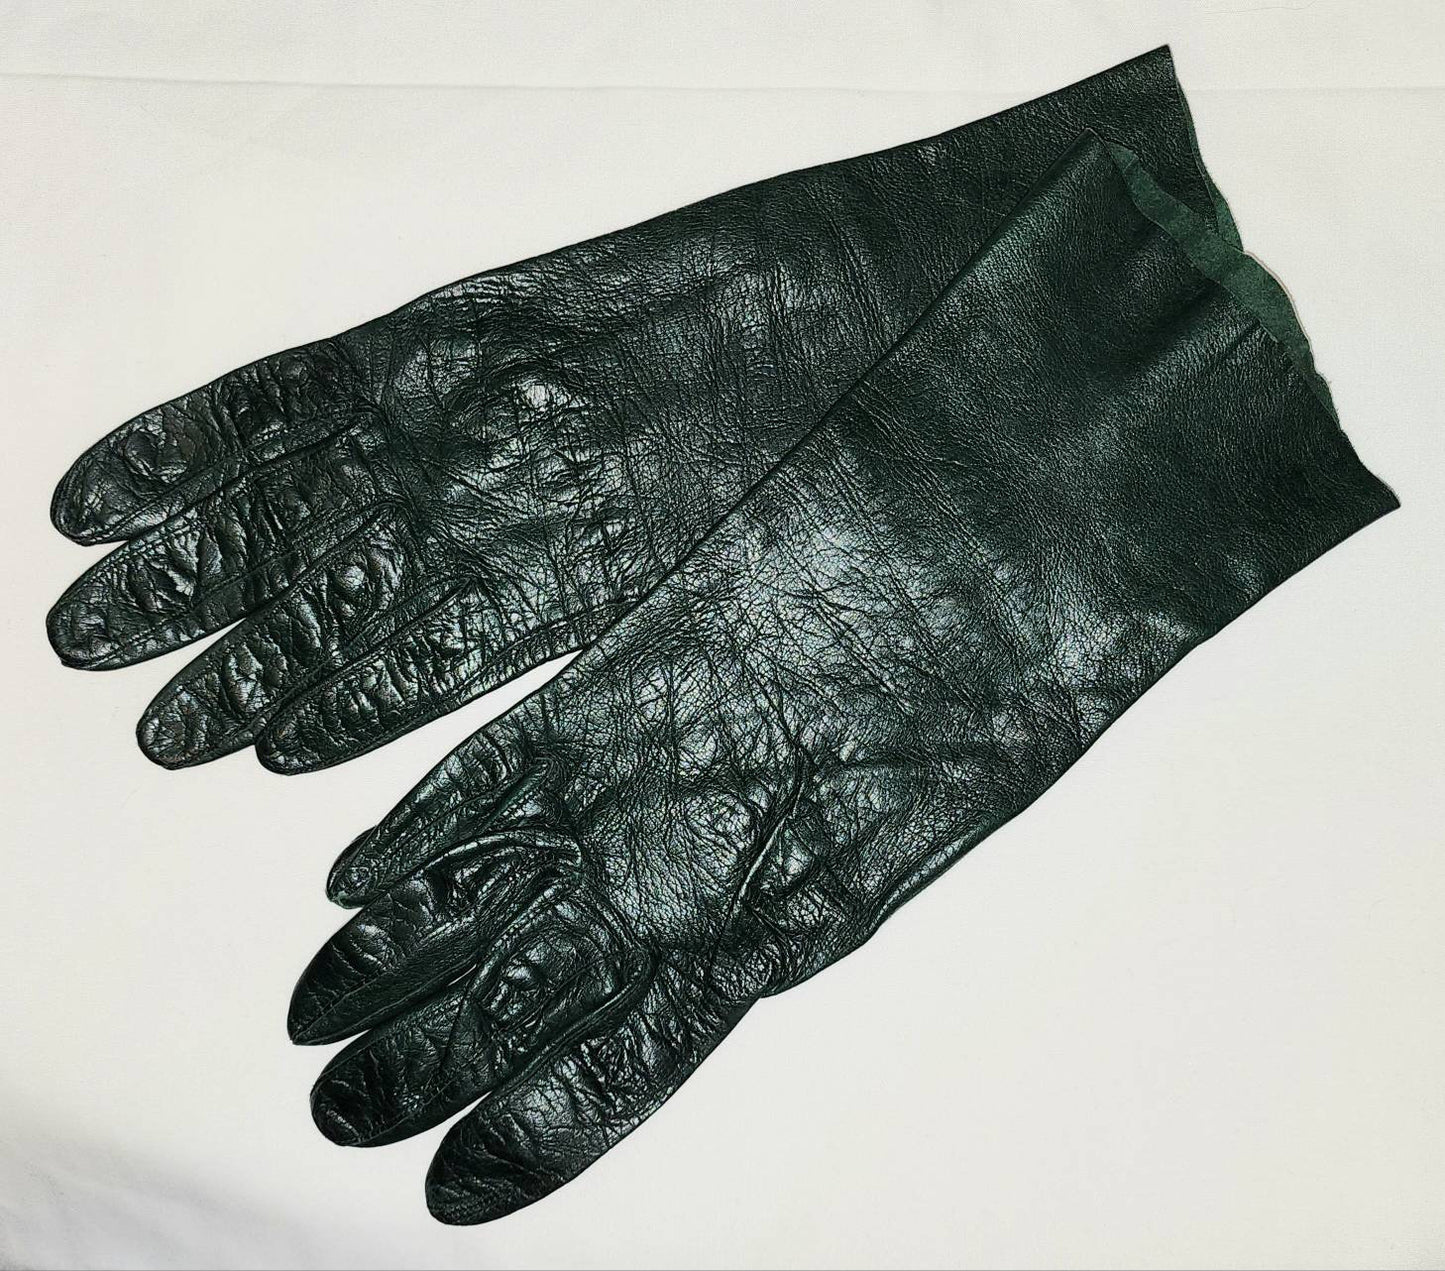 Vintage Leather Gloves 1950s 60s Midlength Thin Dark Green Leather Gloves Made in Italy Italian Leather Mid Century 7